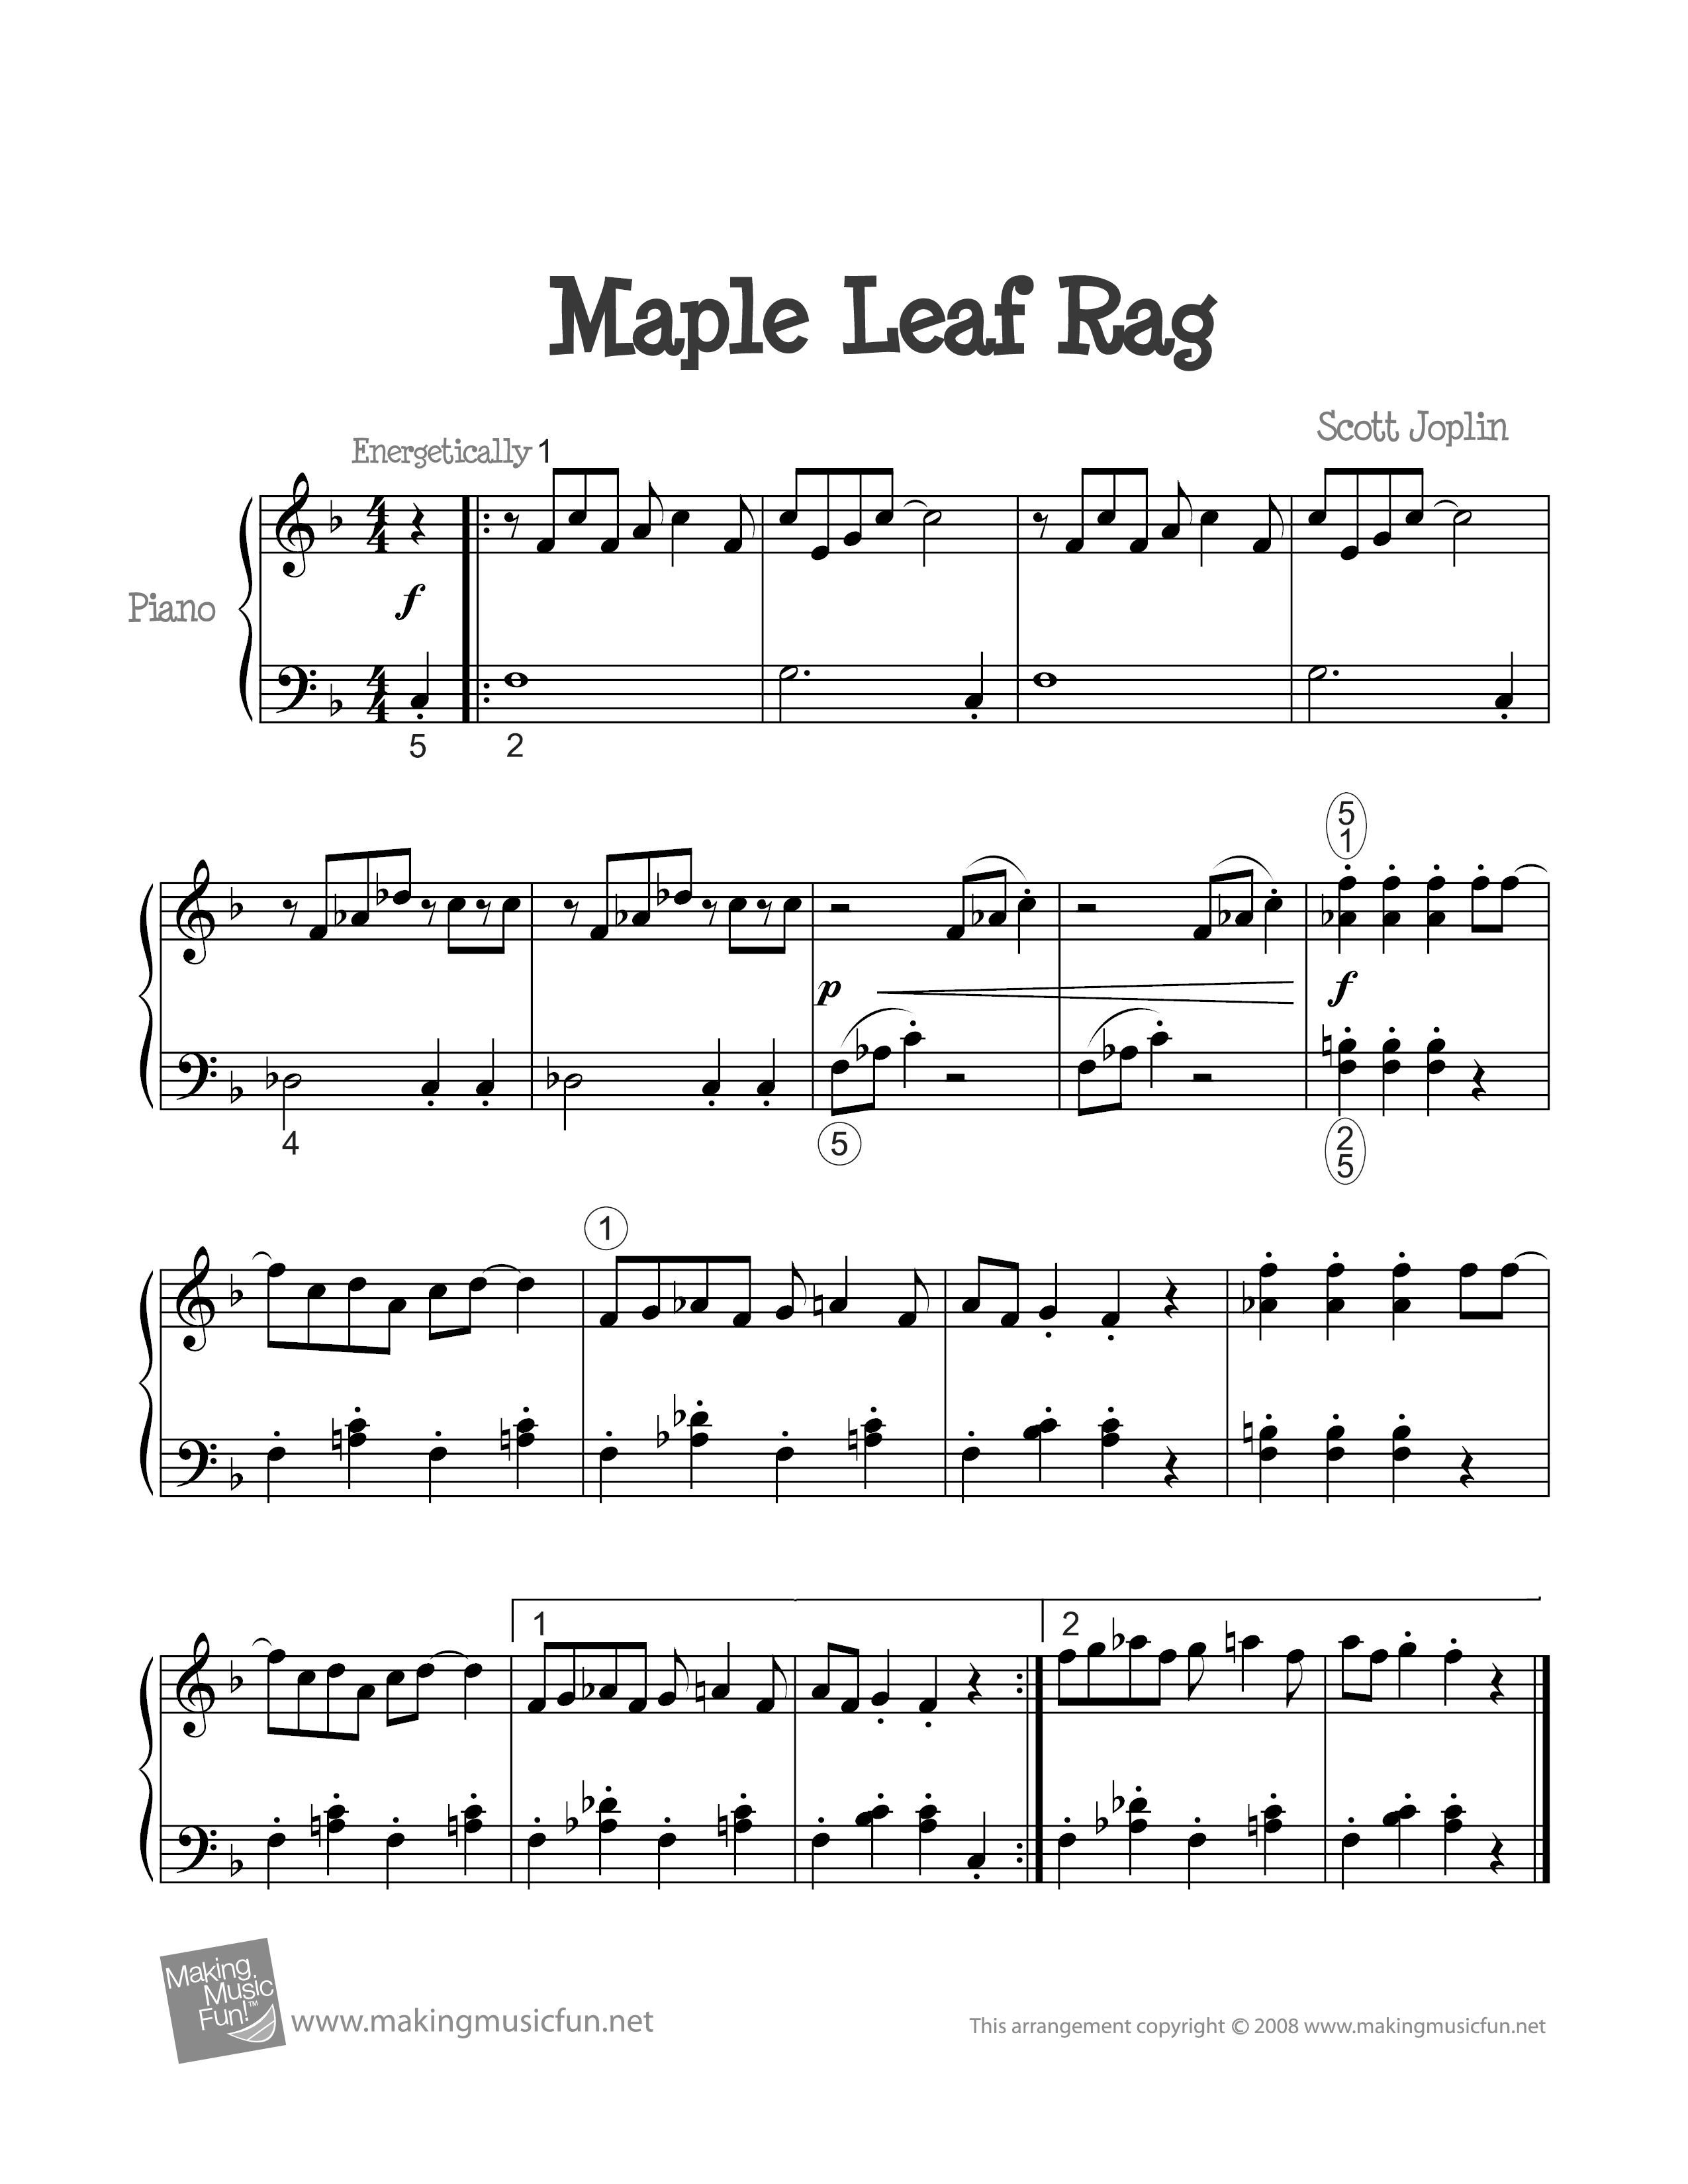 10+ Maple Leaf Rag Piano Sheet Music Free Images // Music Sheet Download